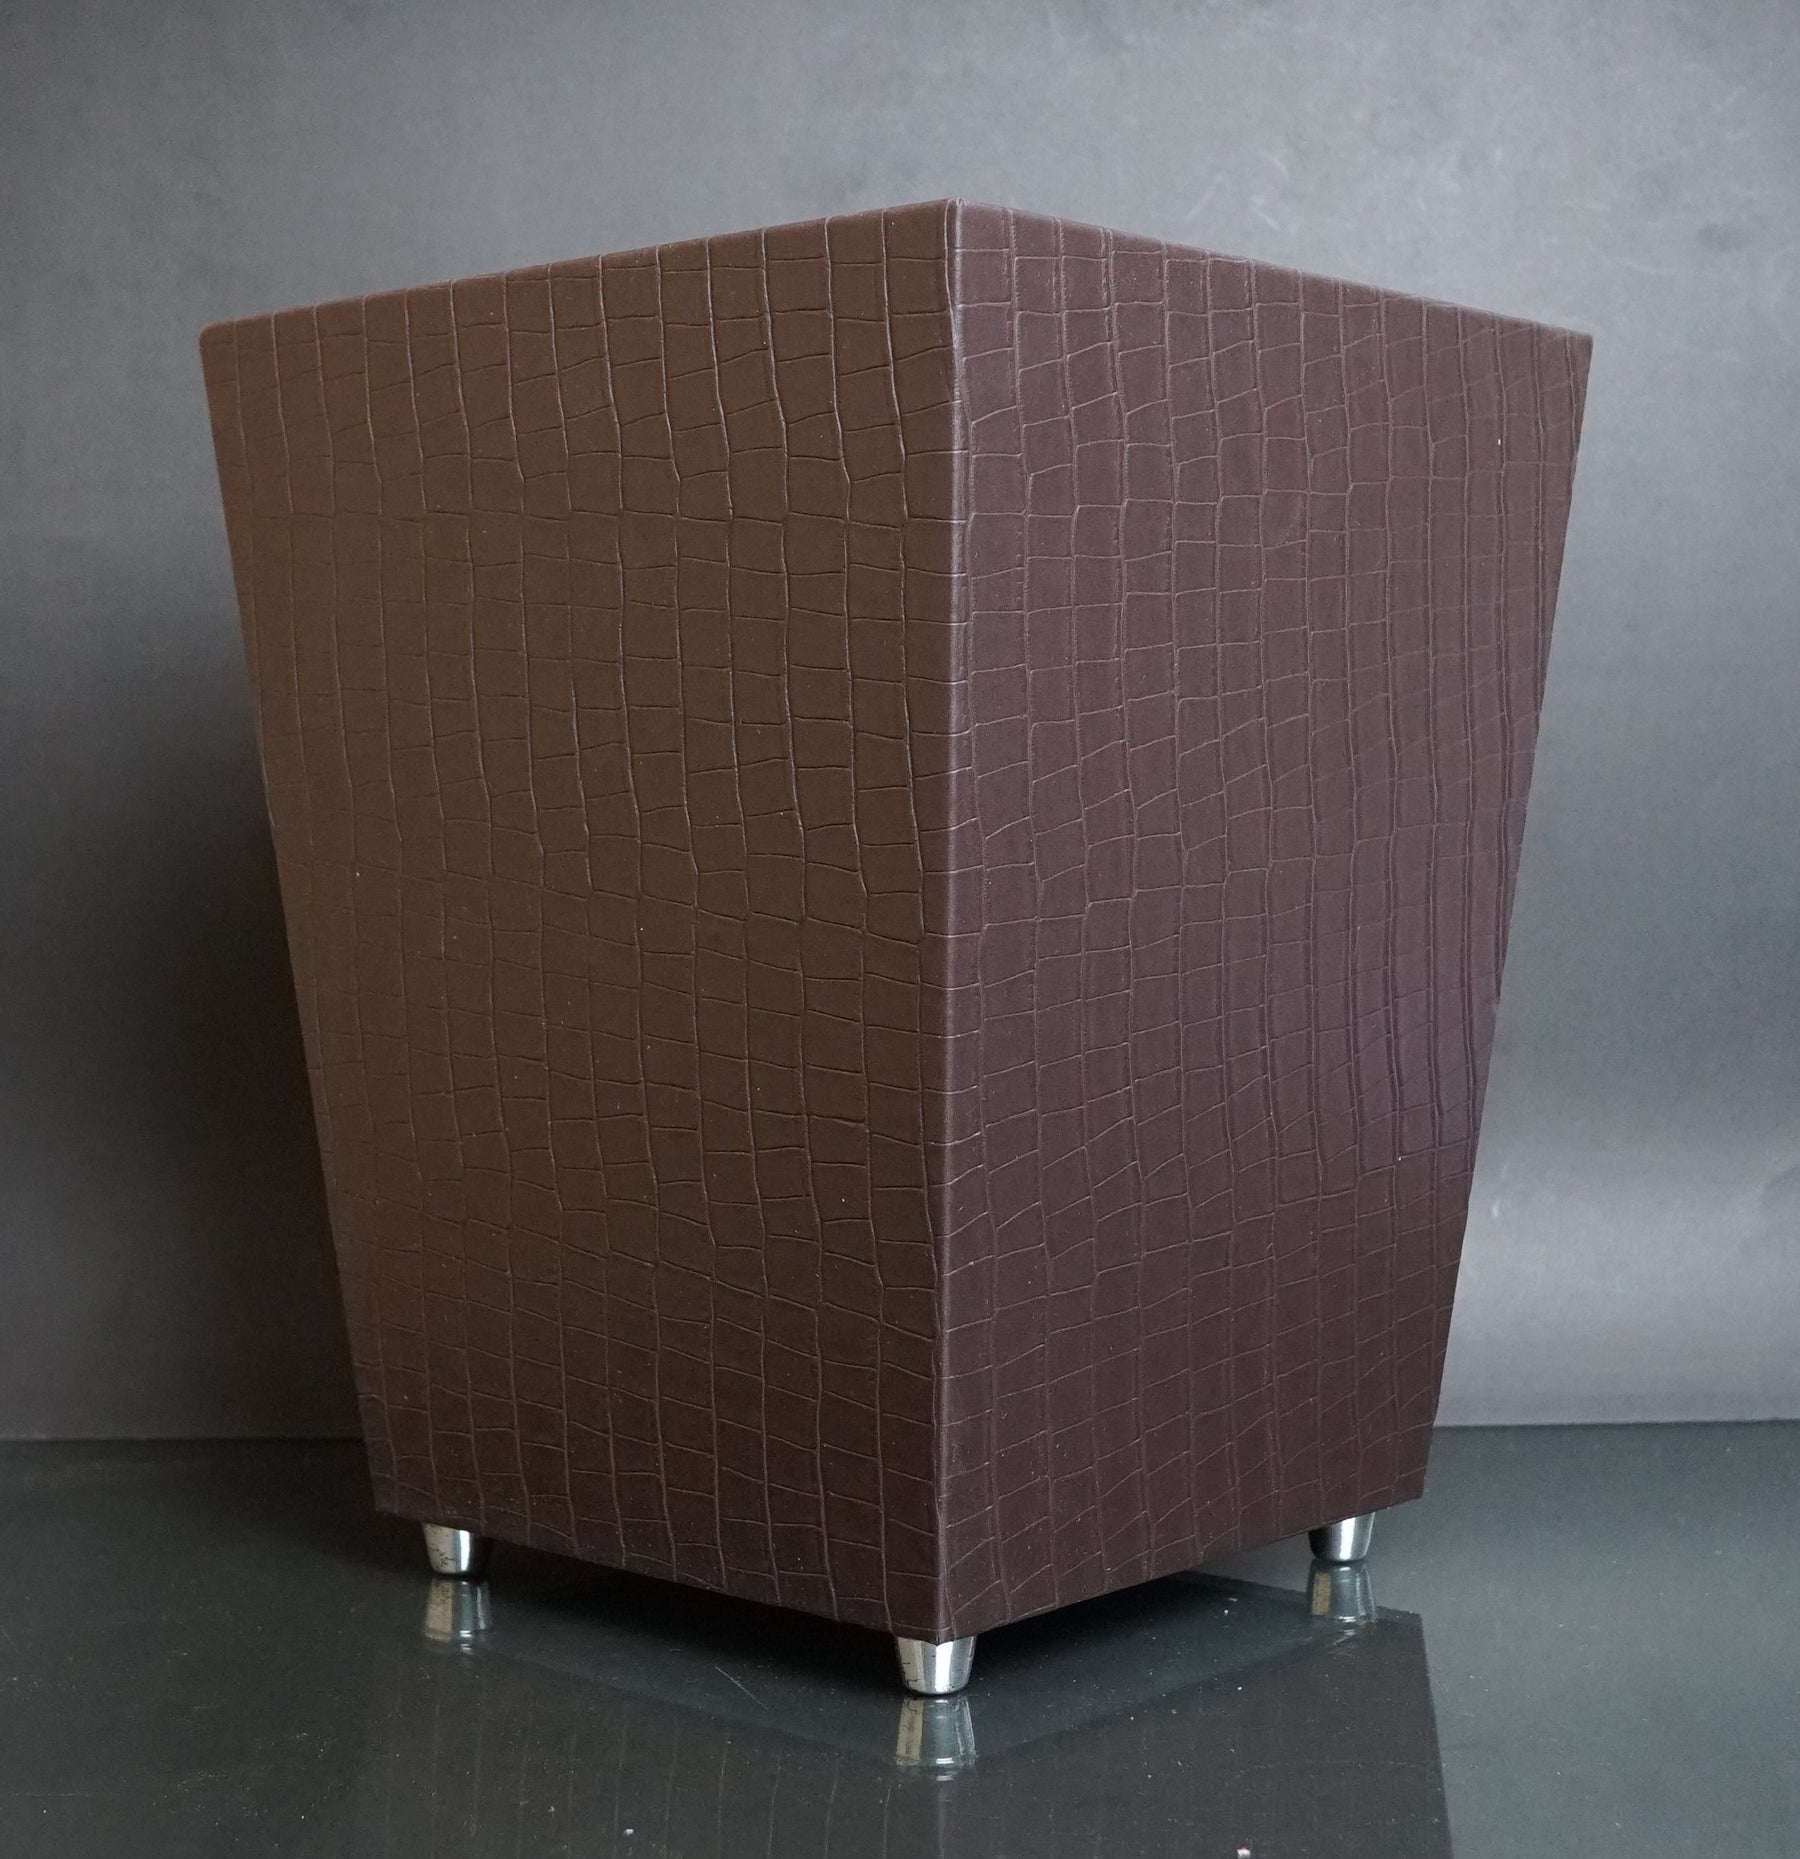 Leather Dustbin & Tissue Box Set - Textured - Brown